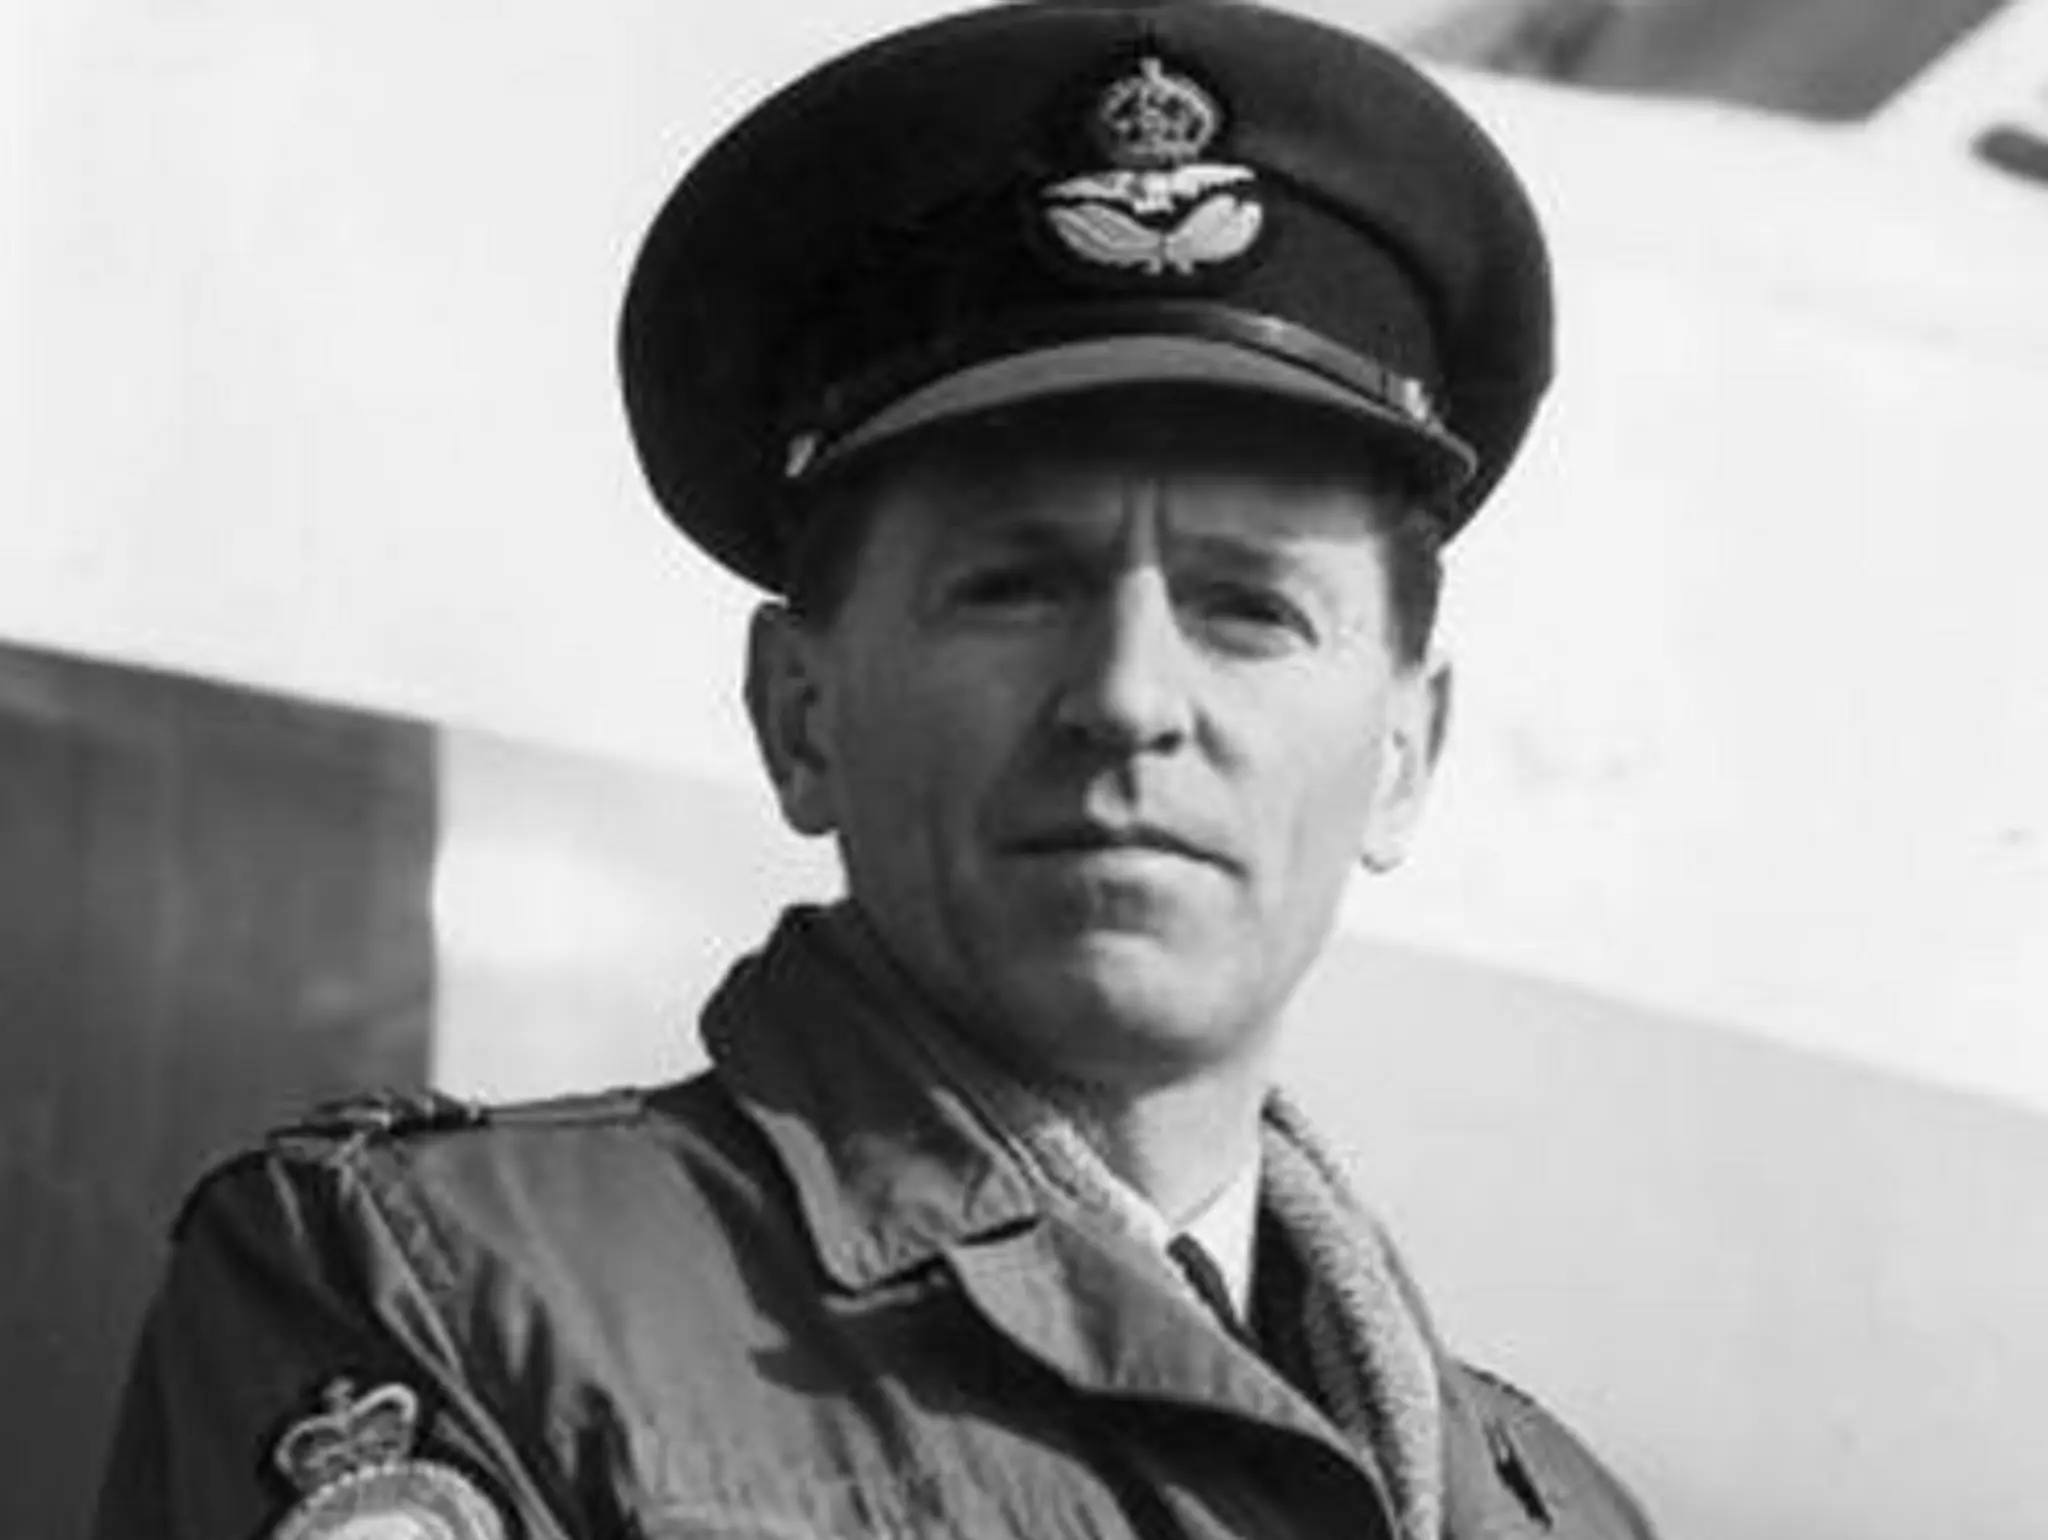 Squadron Leader Leonard Trent